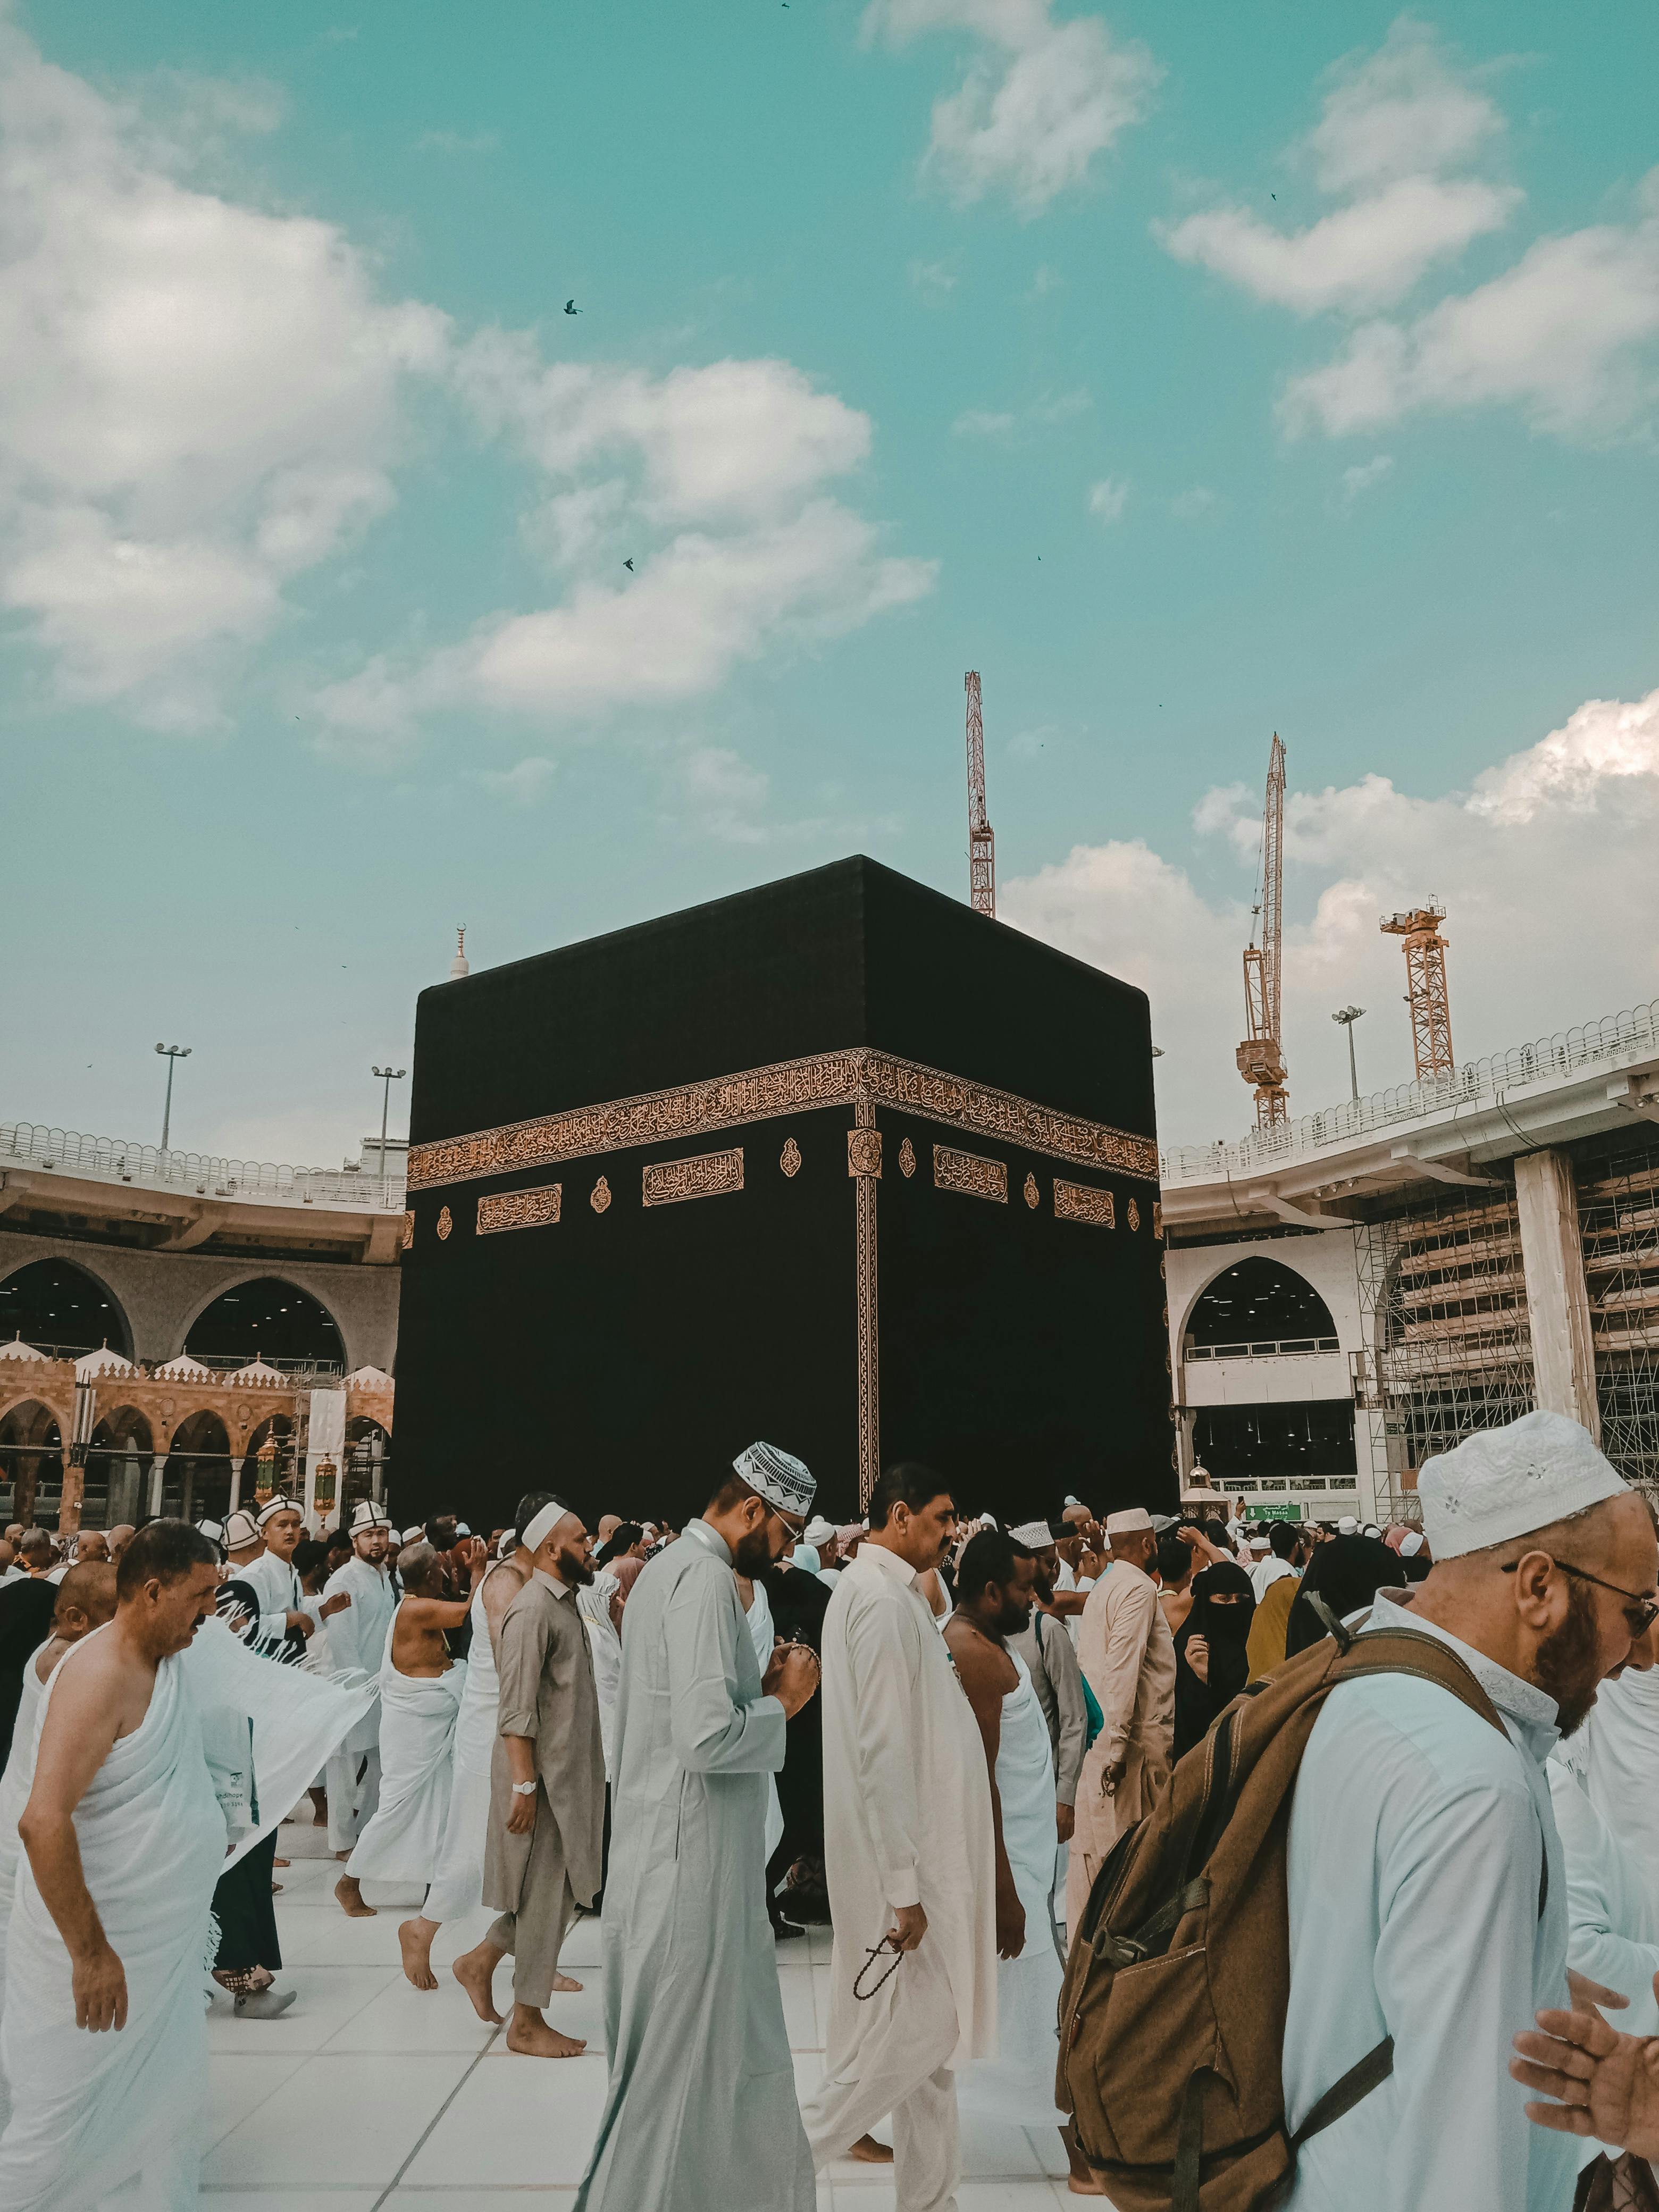 About: Mecca Clock Wallpapers|Makkah 4K Backgrounds 2019 (Google Play  version) | | Apptopia